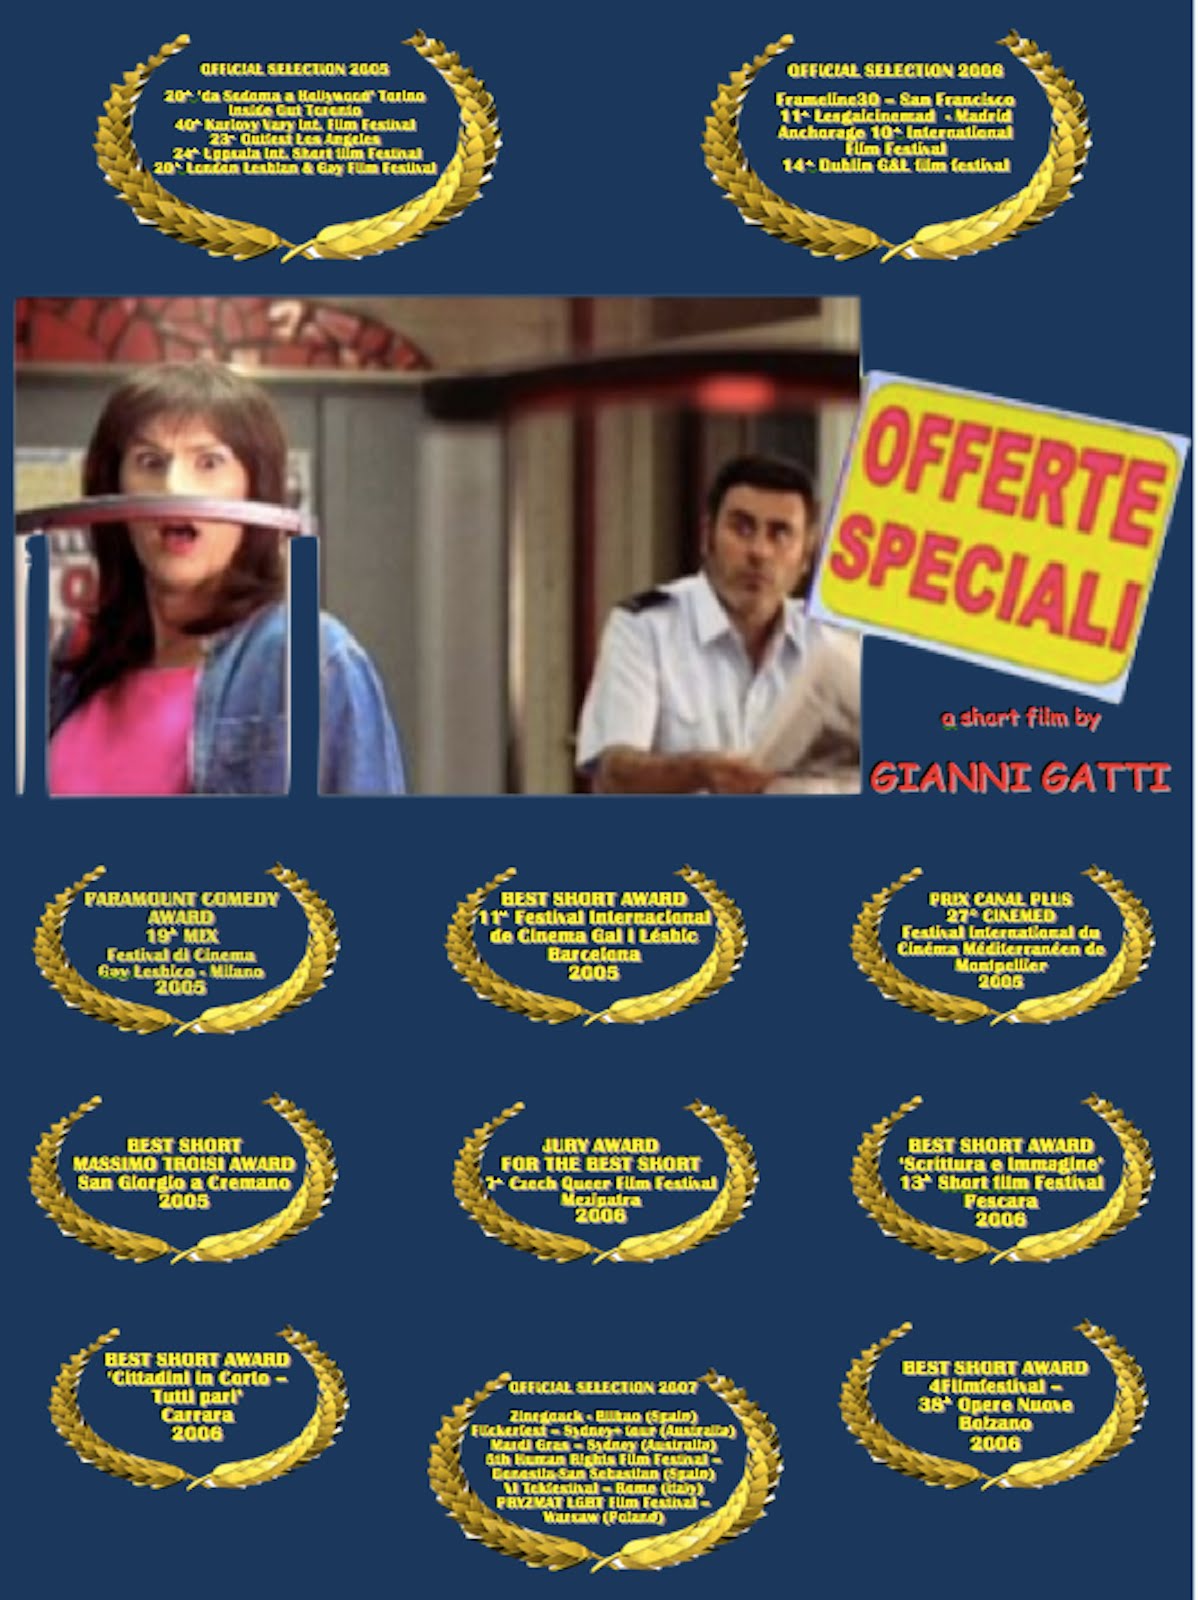 OFFERTE SPECIALI (Today's Special)